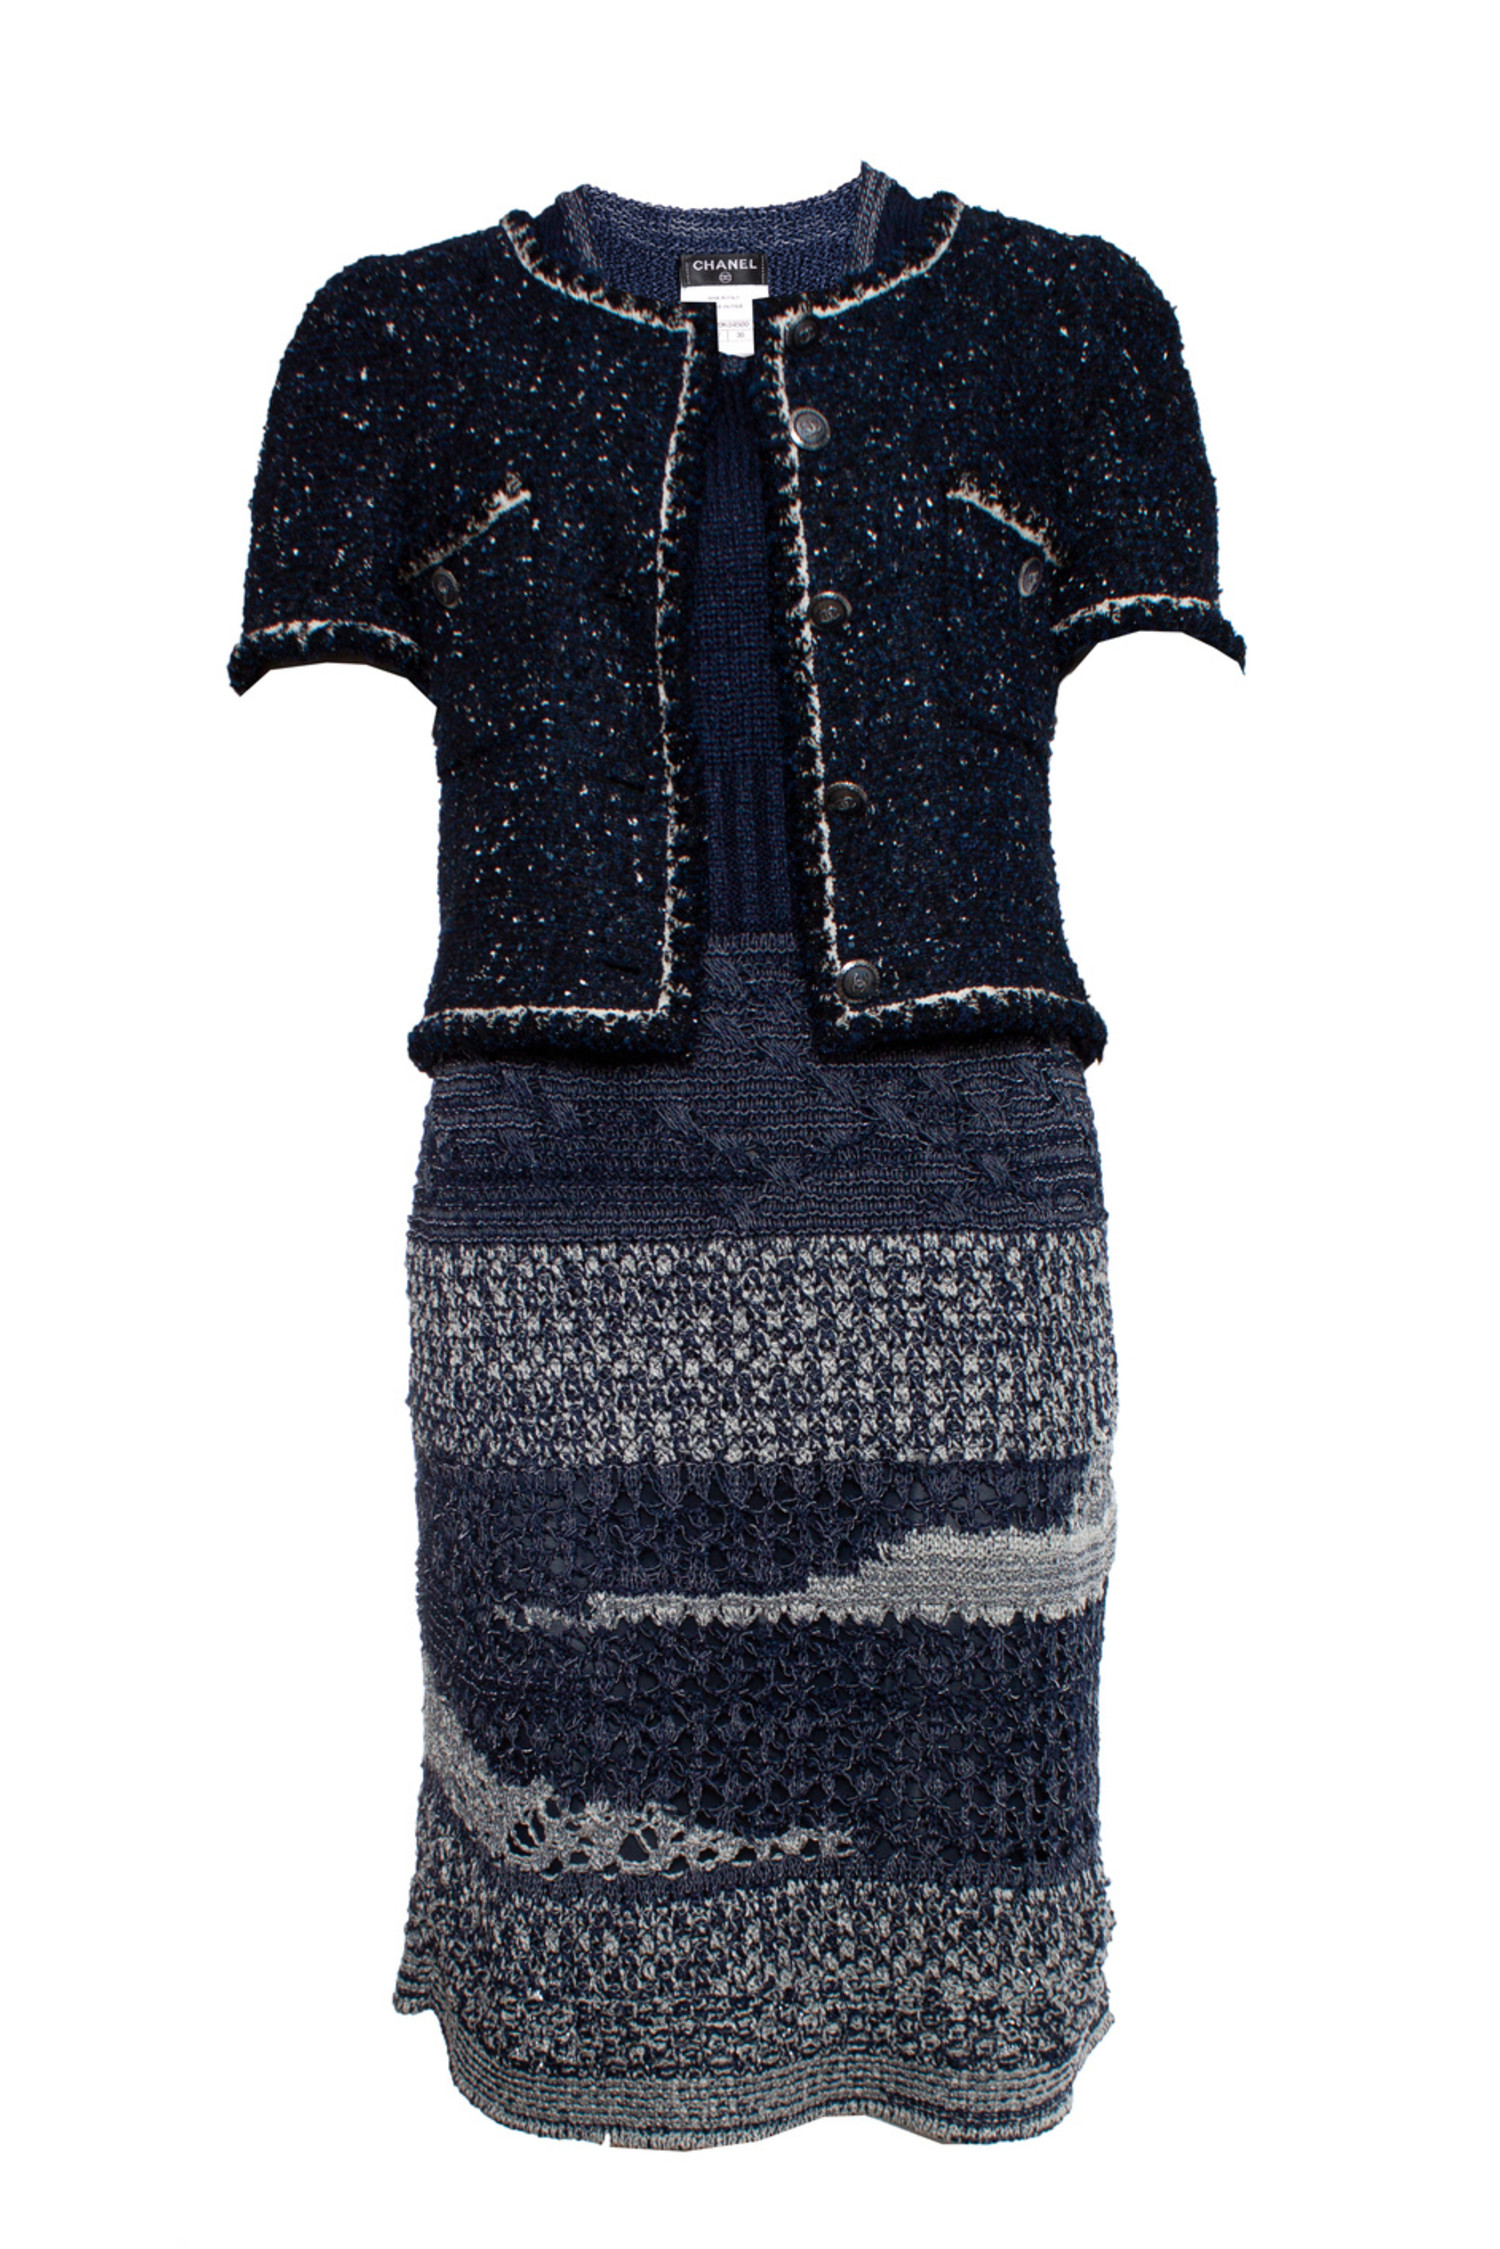 Chanel, Blue wool dress with boucle jacket. - Unique Designer Pieces